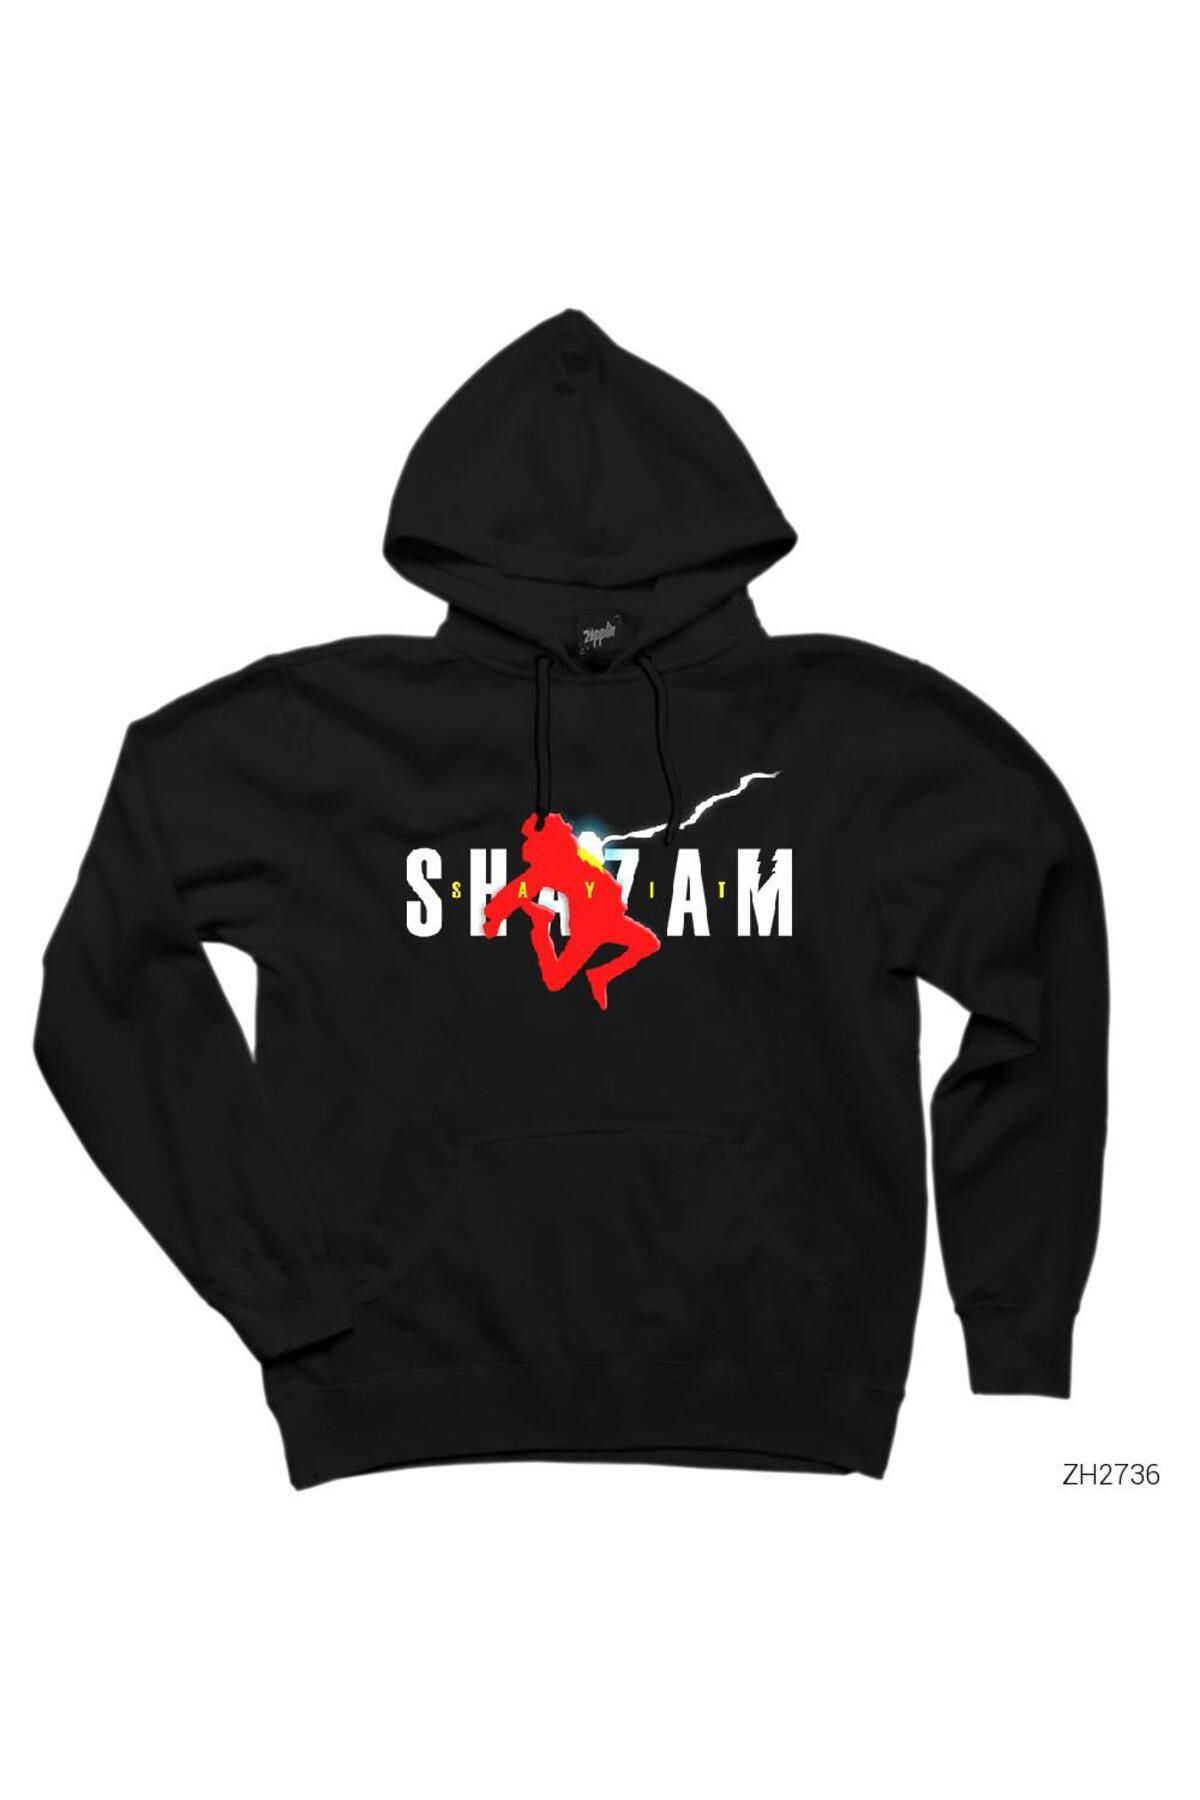 Tomris Hatun Shazam Logo and Child Siyah Kapşonlu Sweatshirt Hoodie